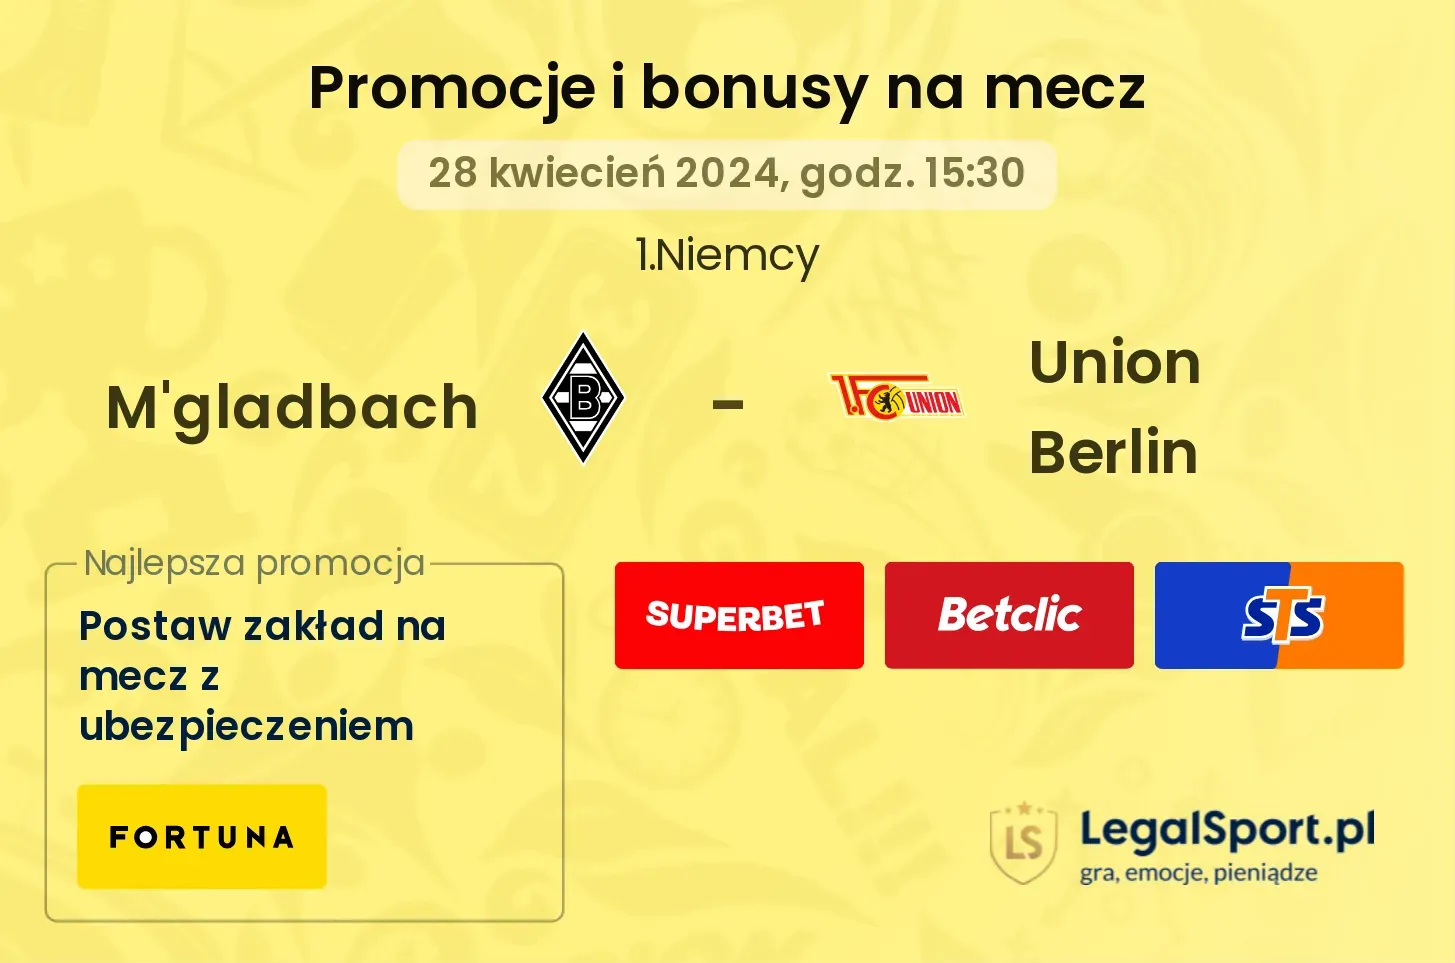 M'gladbach - Union Berlin promocje bonusy na mecz